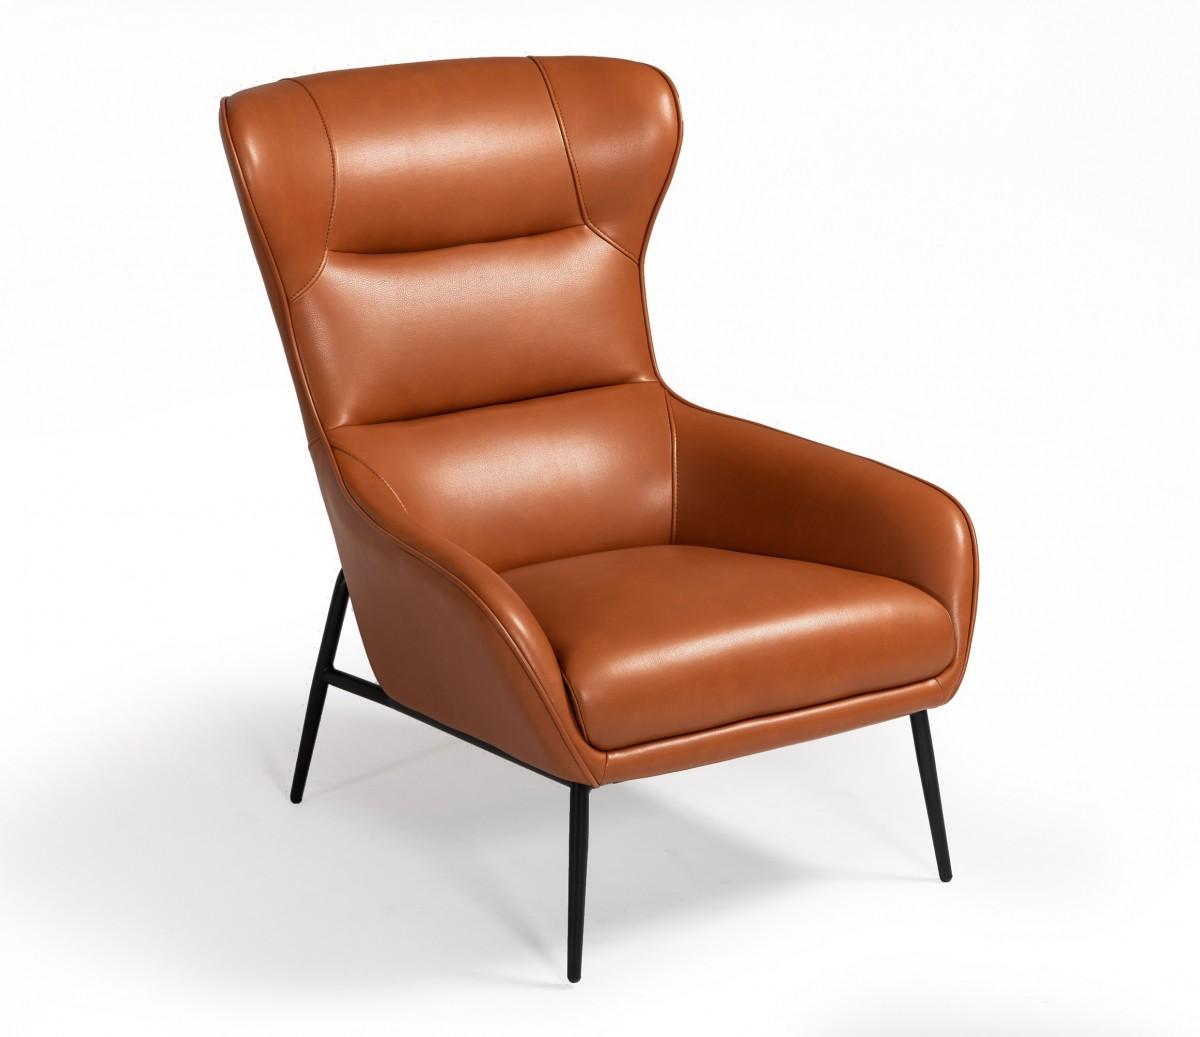 Contemporary, Modern Lounge Chaise SUSAN ACCENT CHAIR ORANGE 513-6 PU/METAL LEG VGBNEC-084-ORG in Orange Leatherette